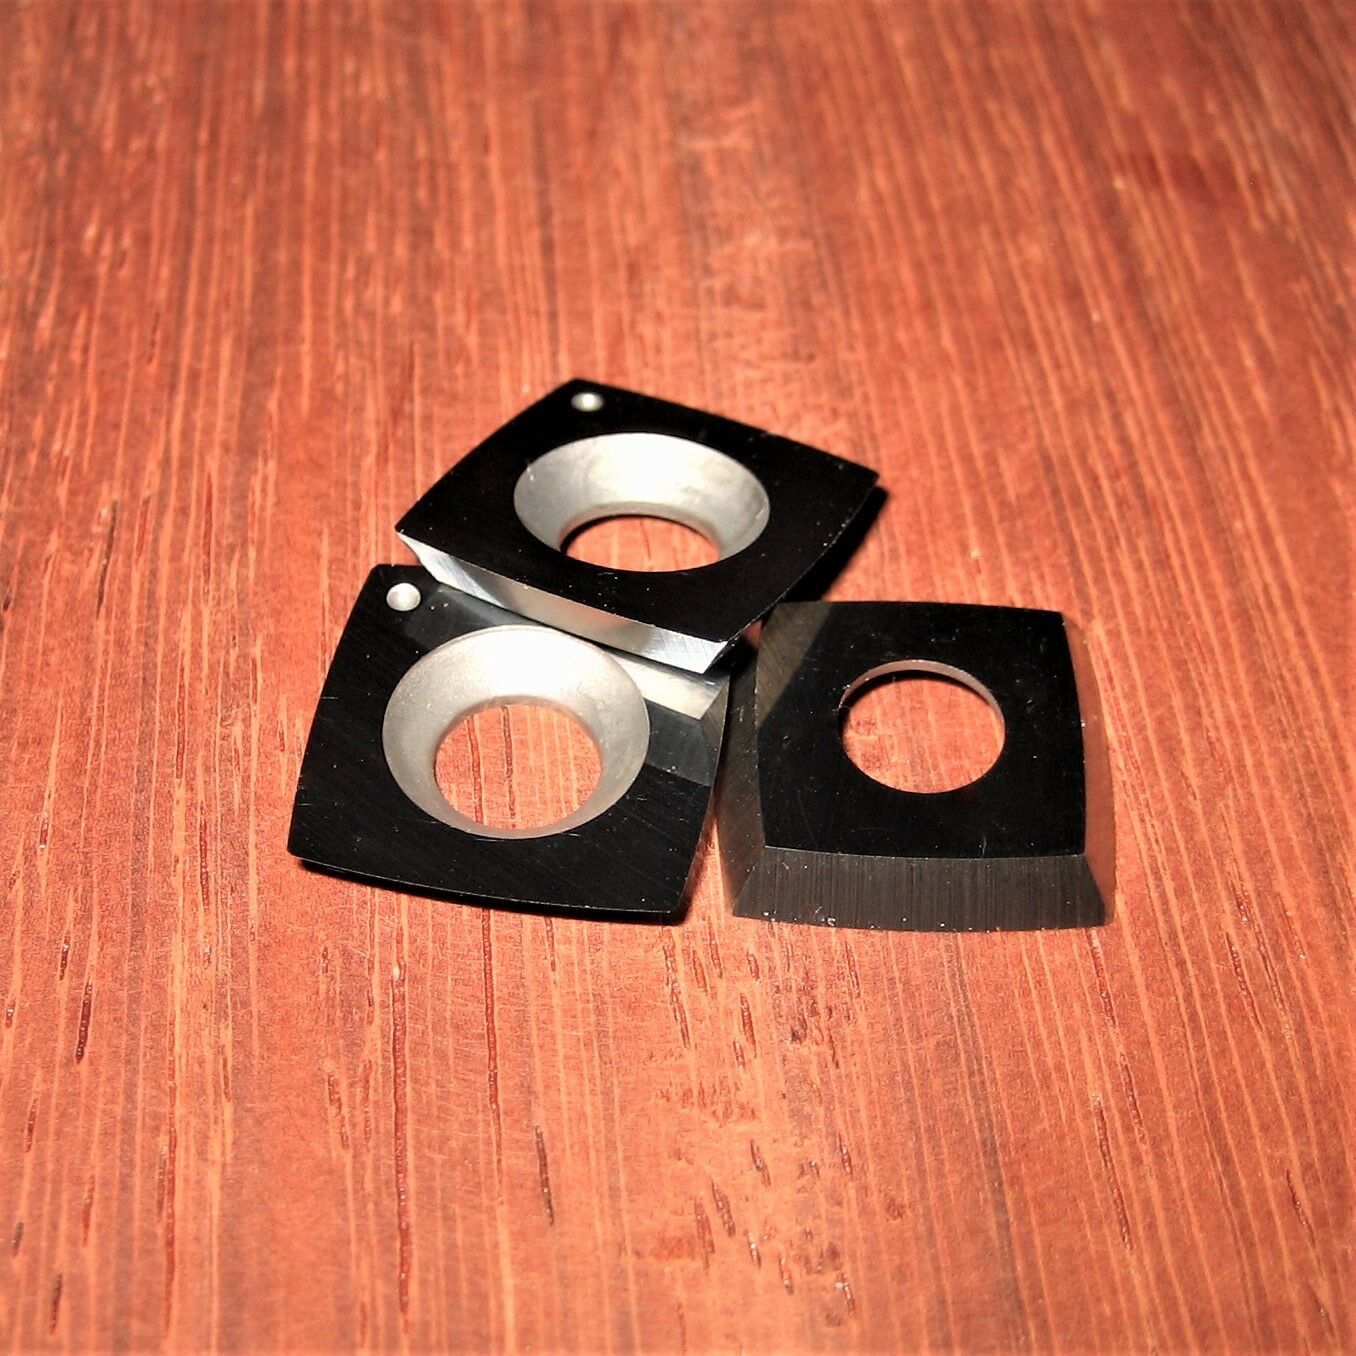 15mm R50 (2") Square Carbide Insert Easy Wood Tools Ci1, Rockler- 3 Pack &screws